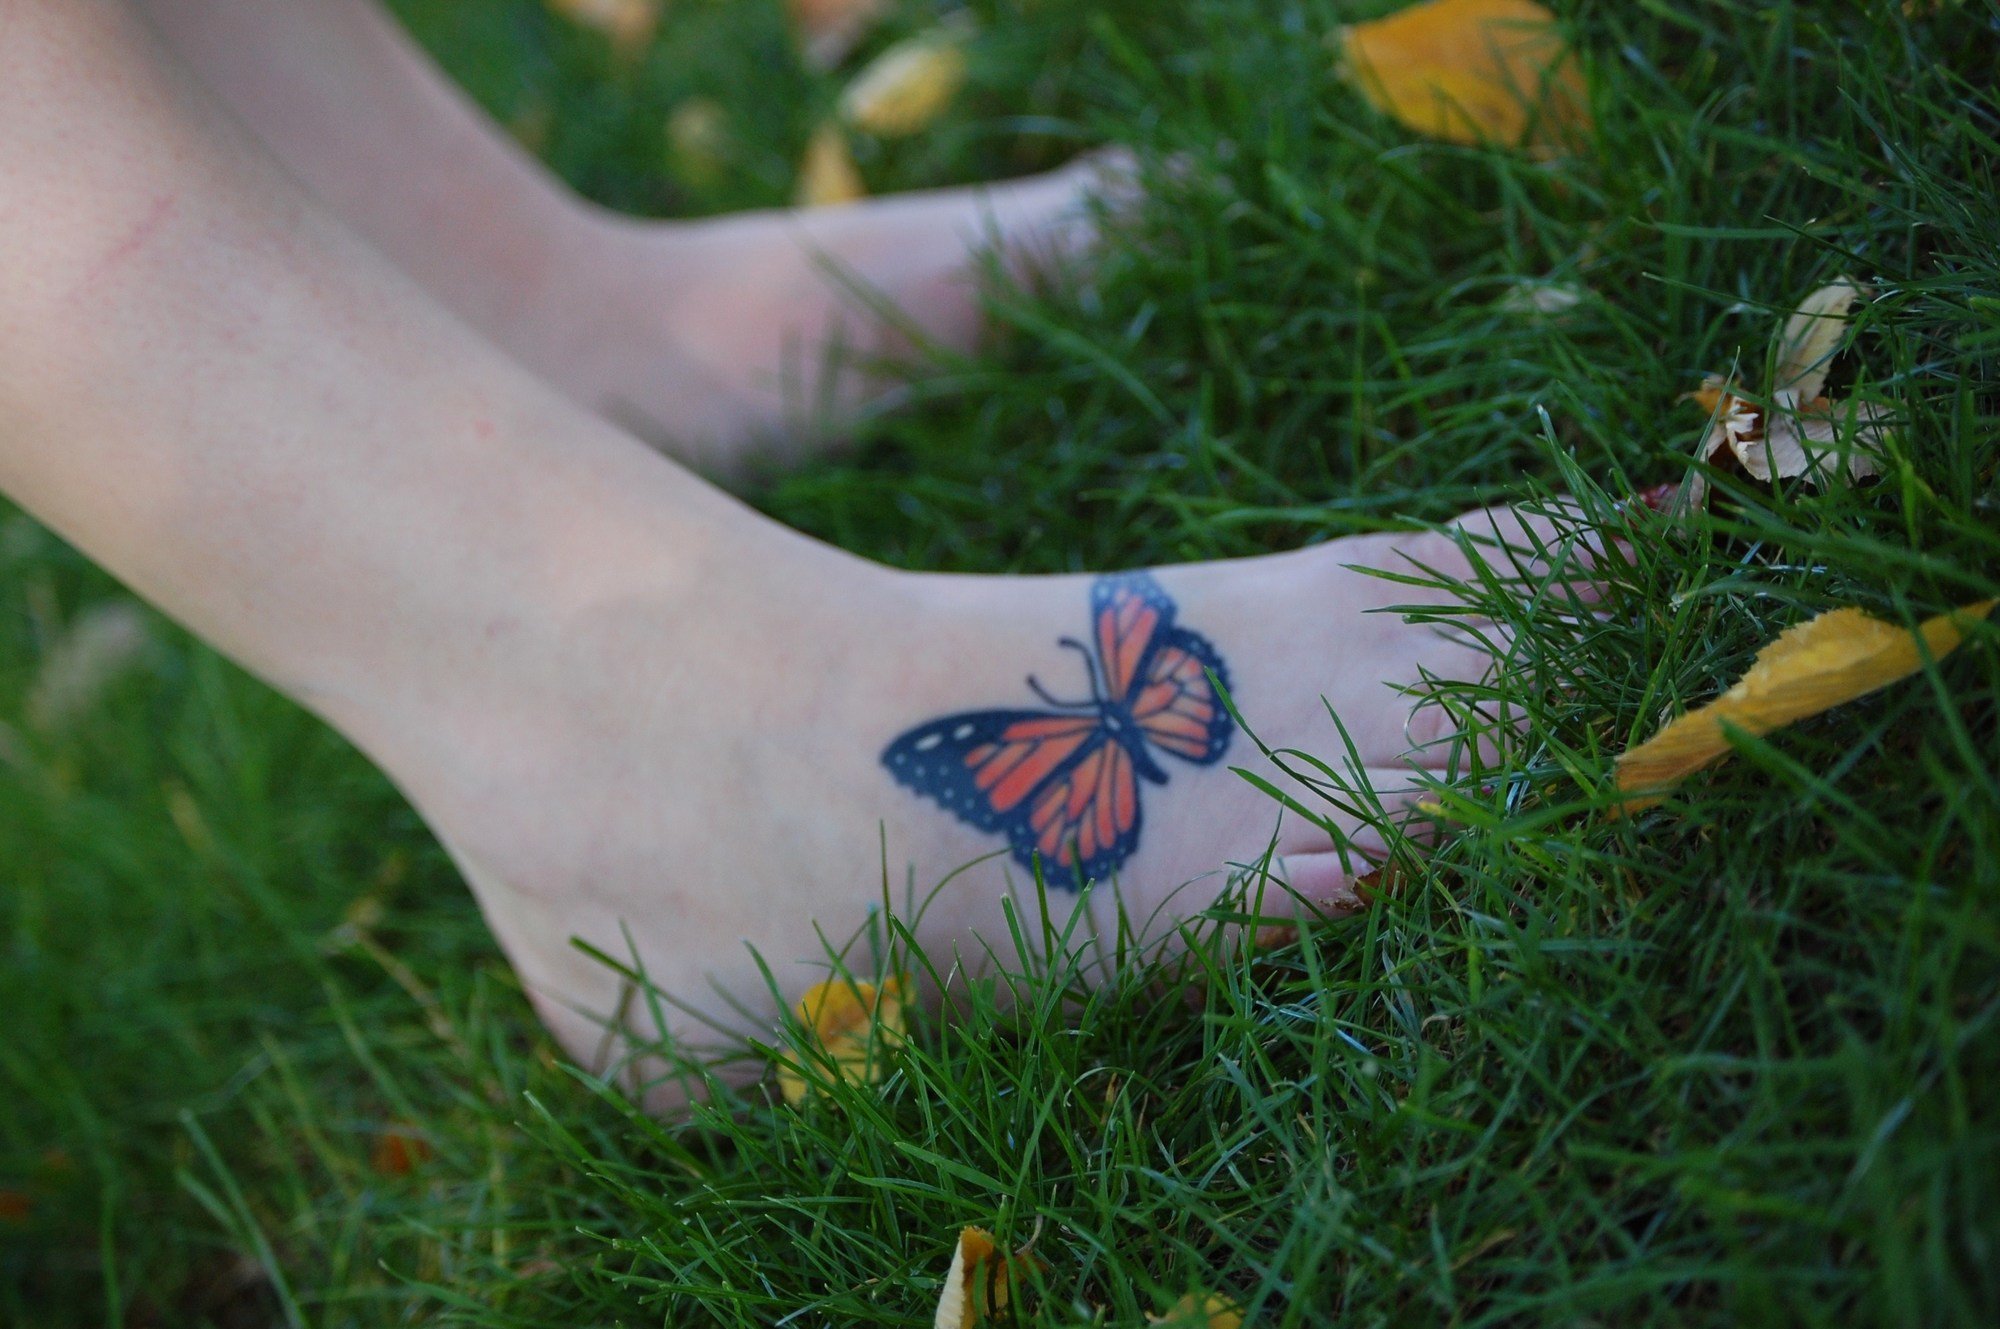 Cool Moths on Arm Tattoo Idea